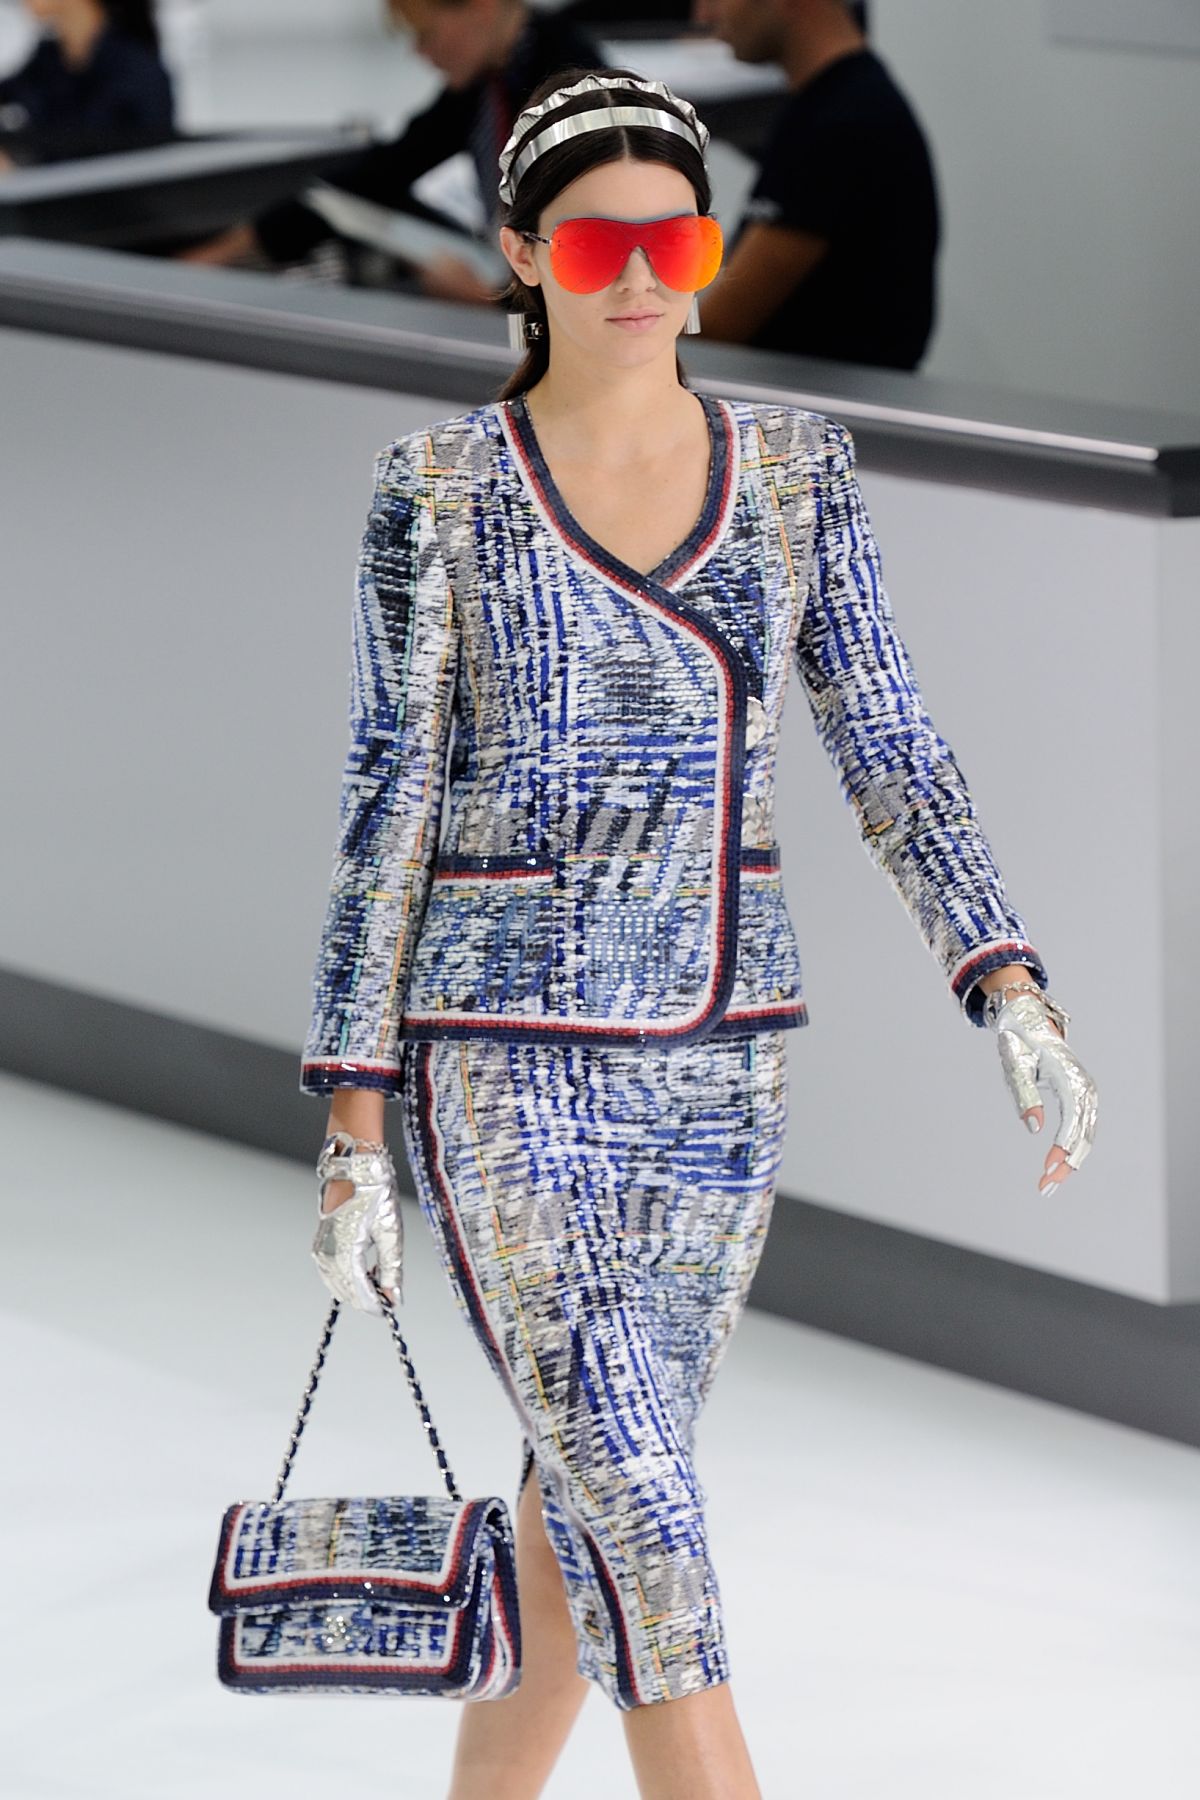 KENDALL JENNER at Chanel Fashion Show at Paris Fashion Week 10/06/2015 ...